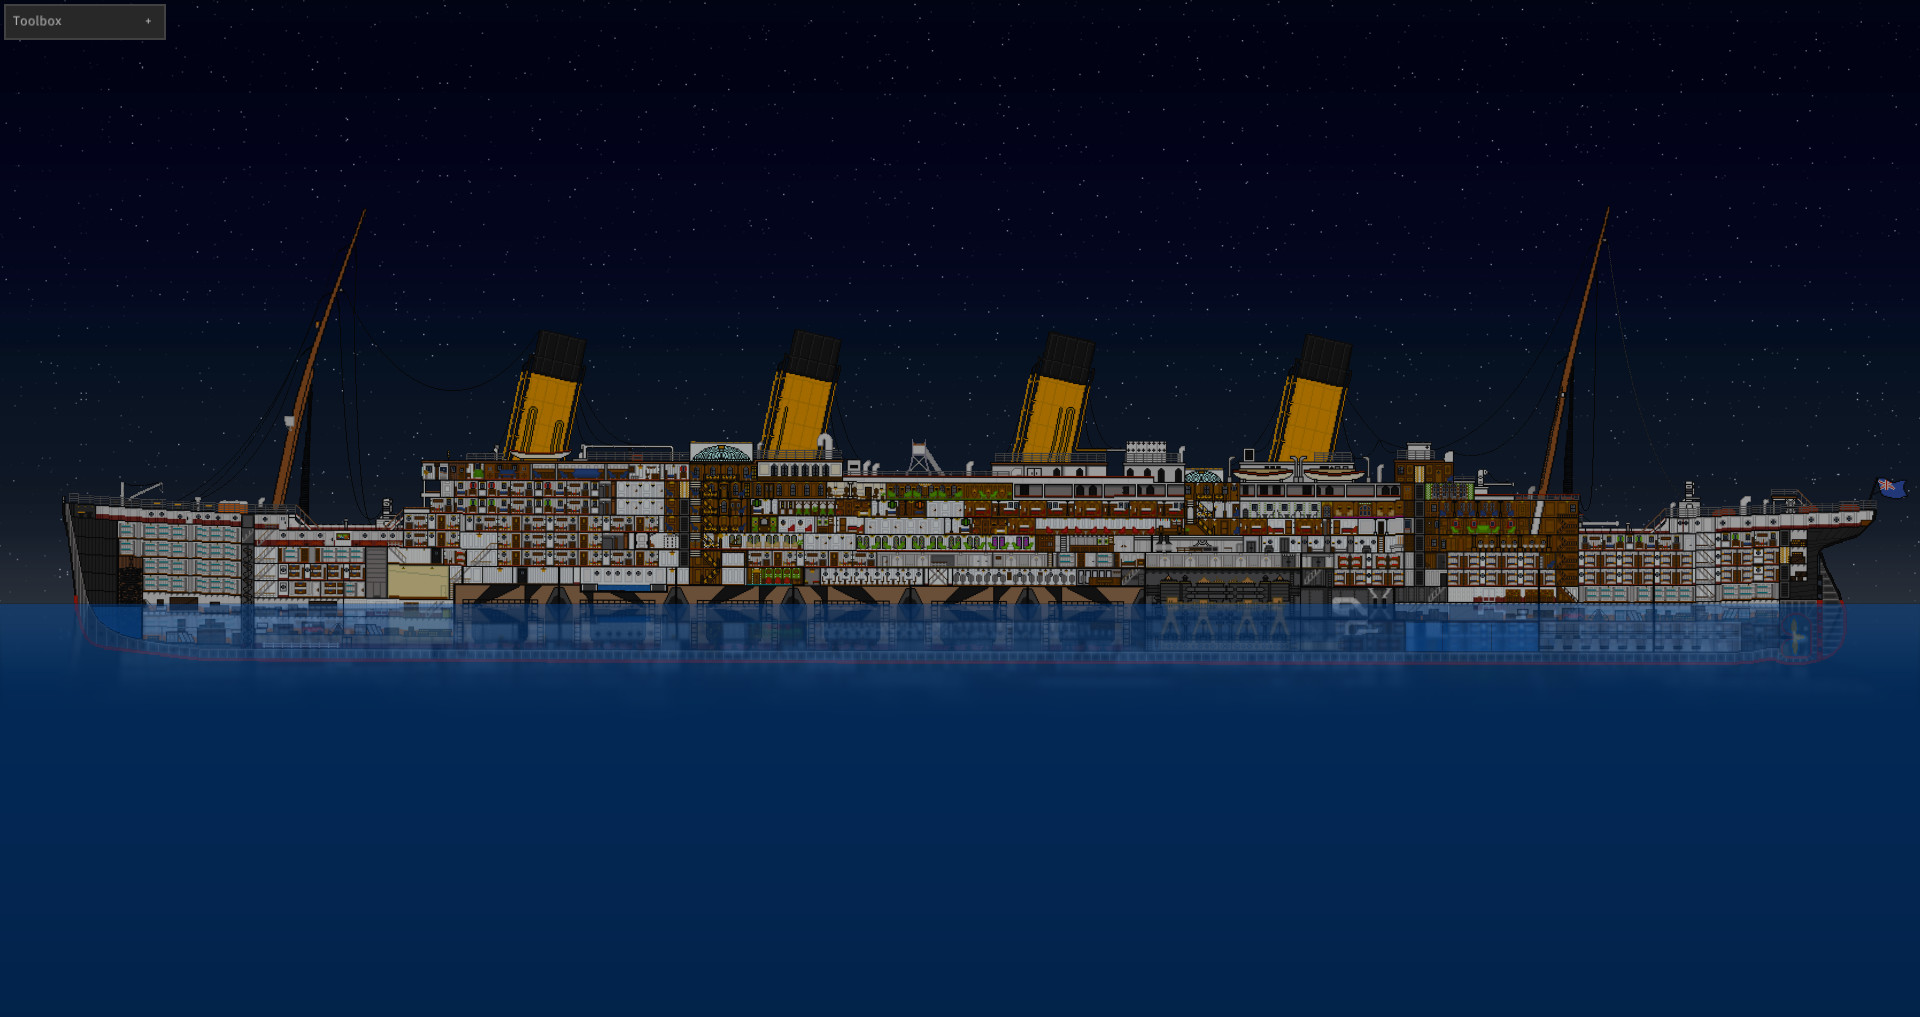 titanic sinking simulator on steam